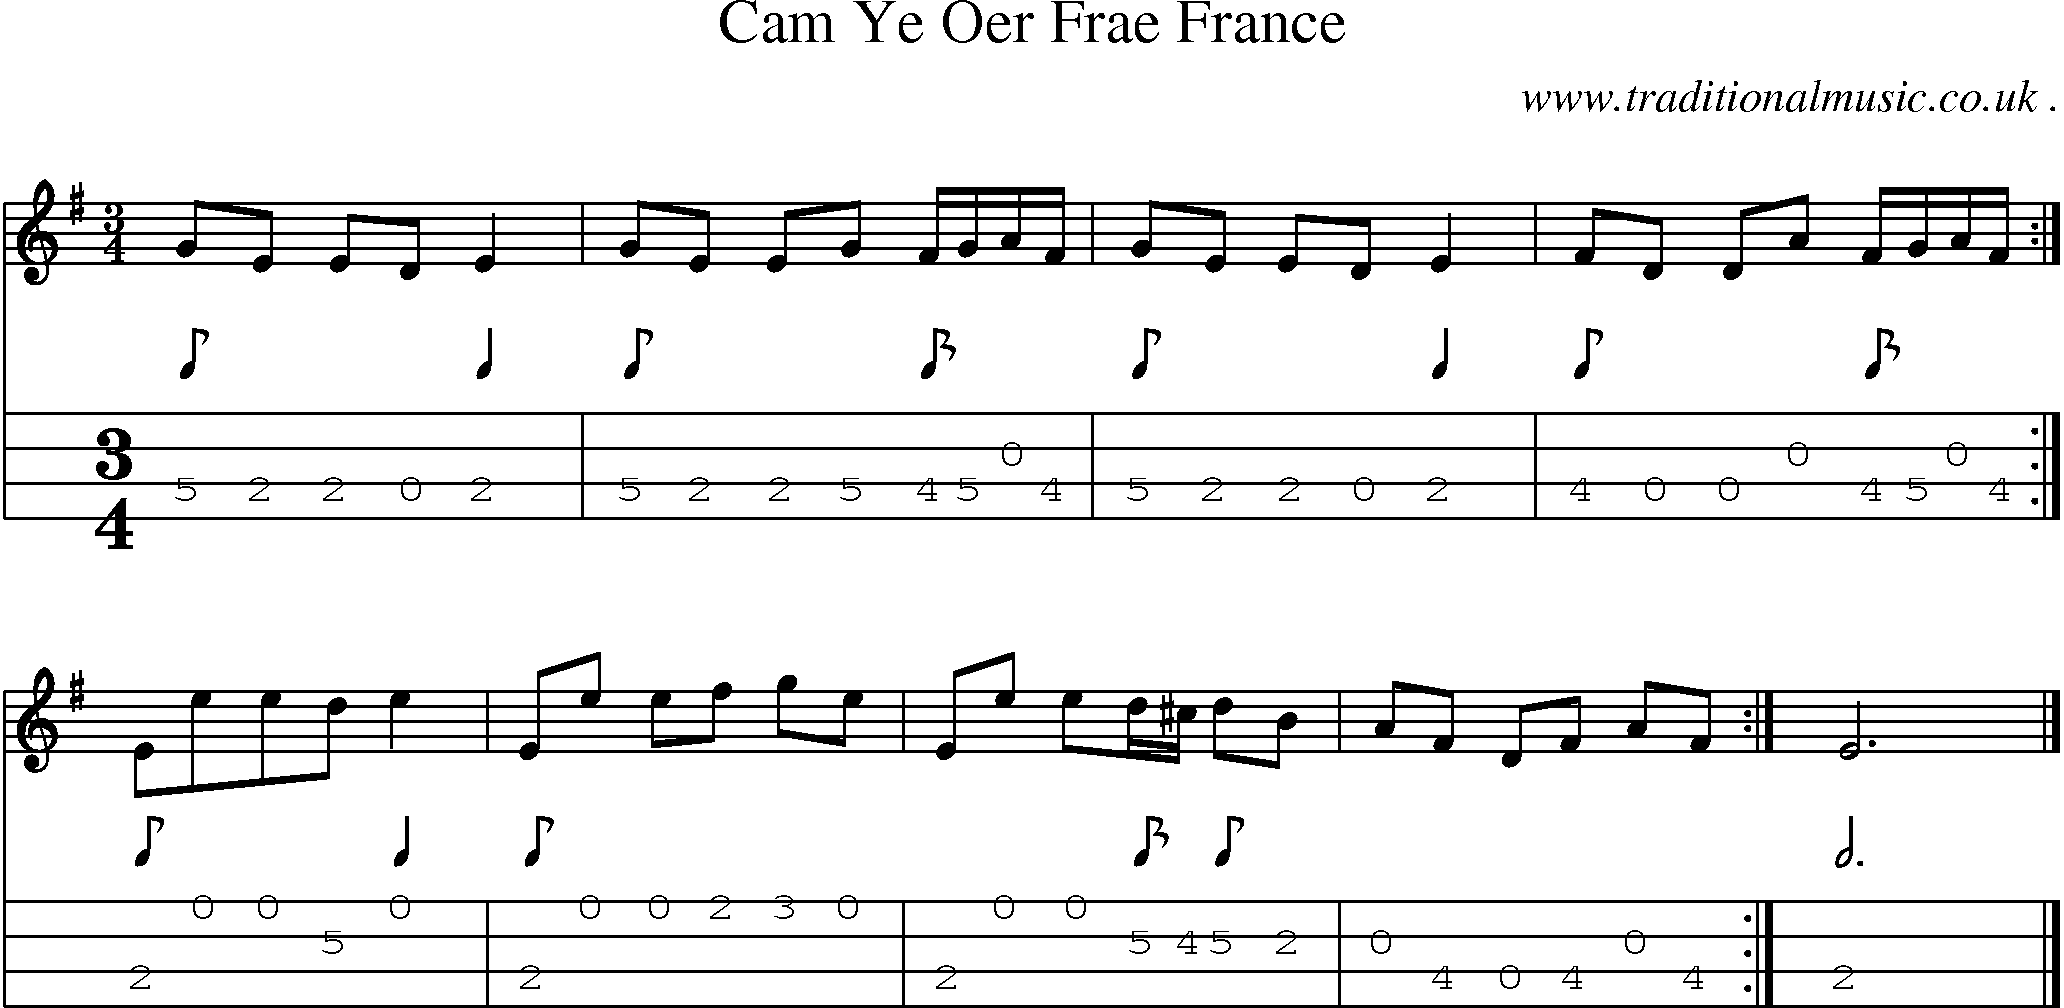 Sheet-music  score, Chords and Mandolin Tabs for Cam Ye Oer Frae France